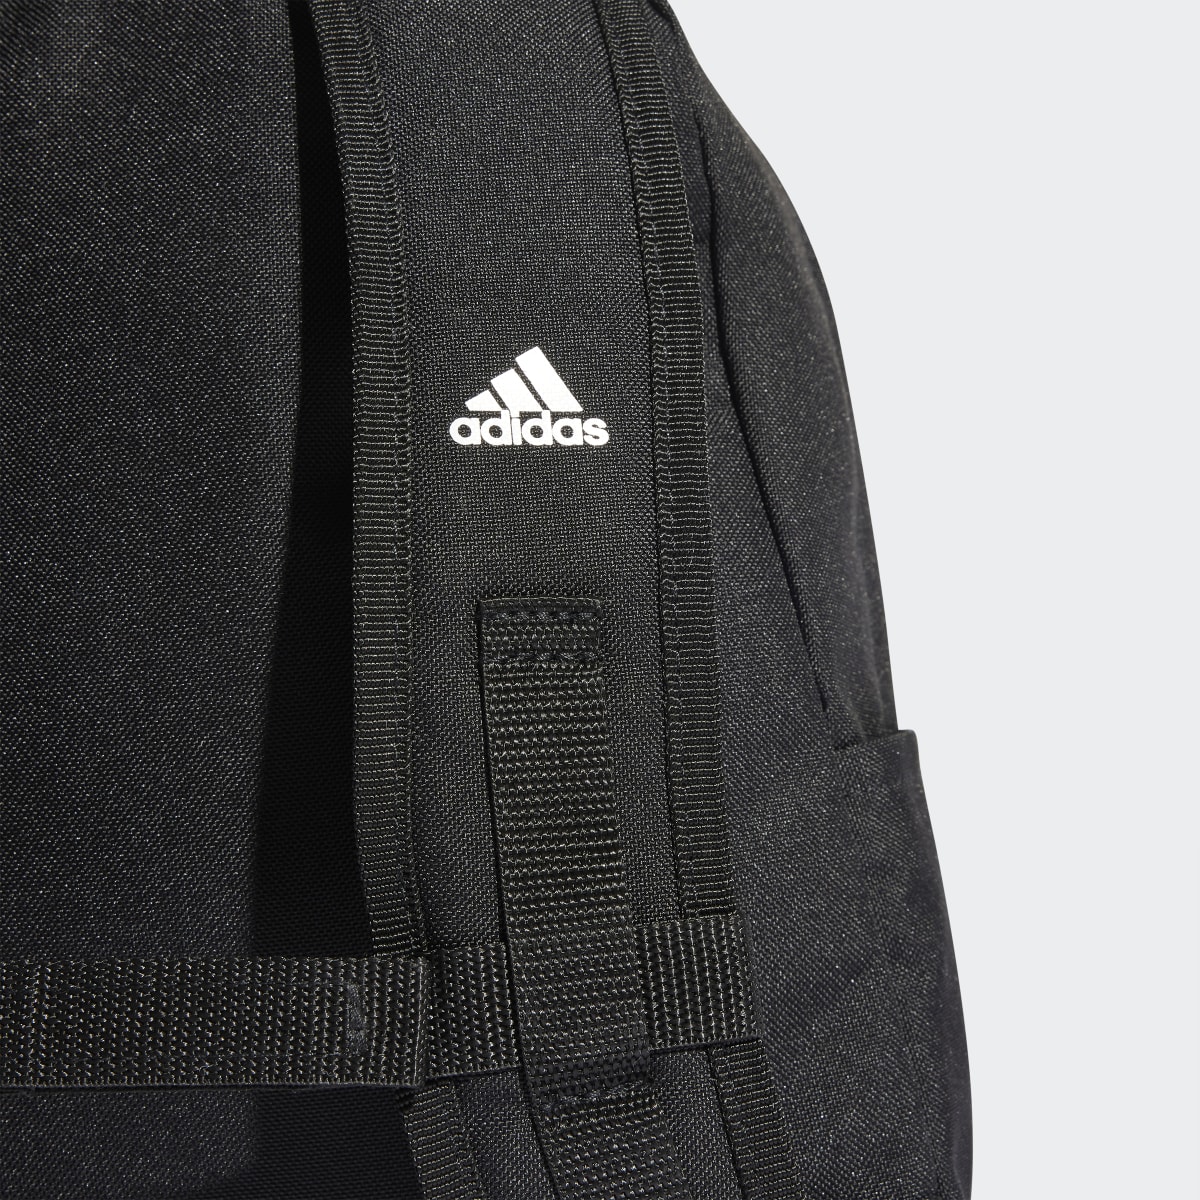 Adidas Backpack. 7